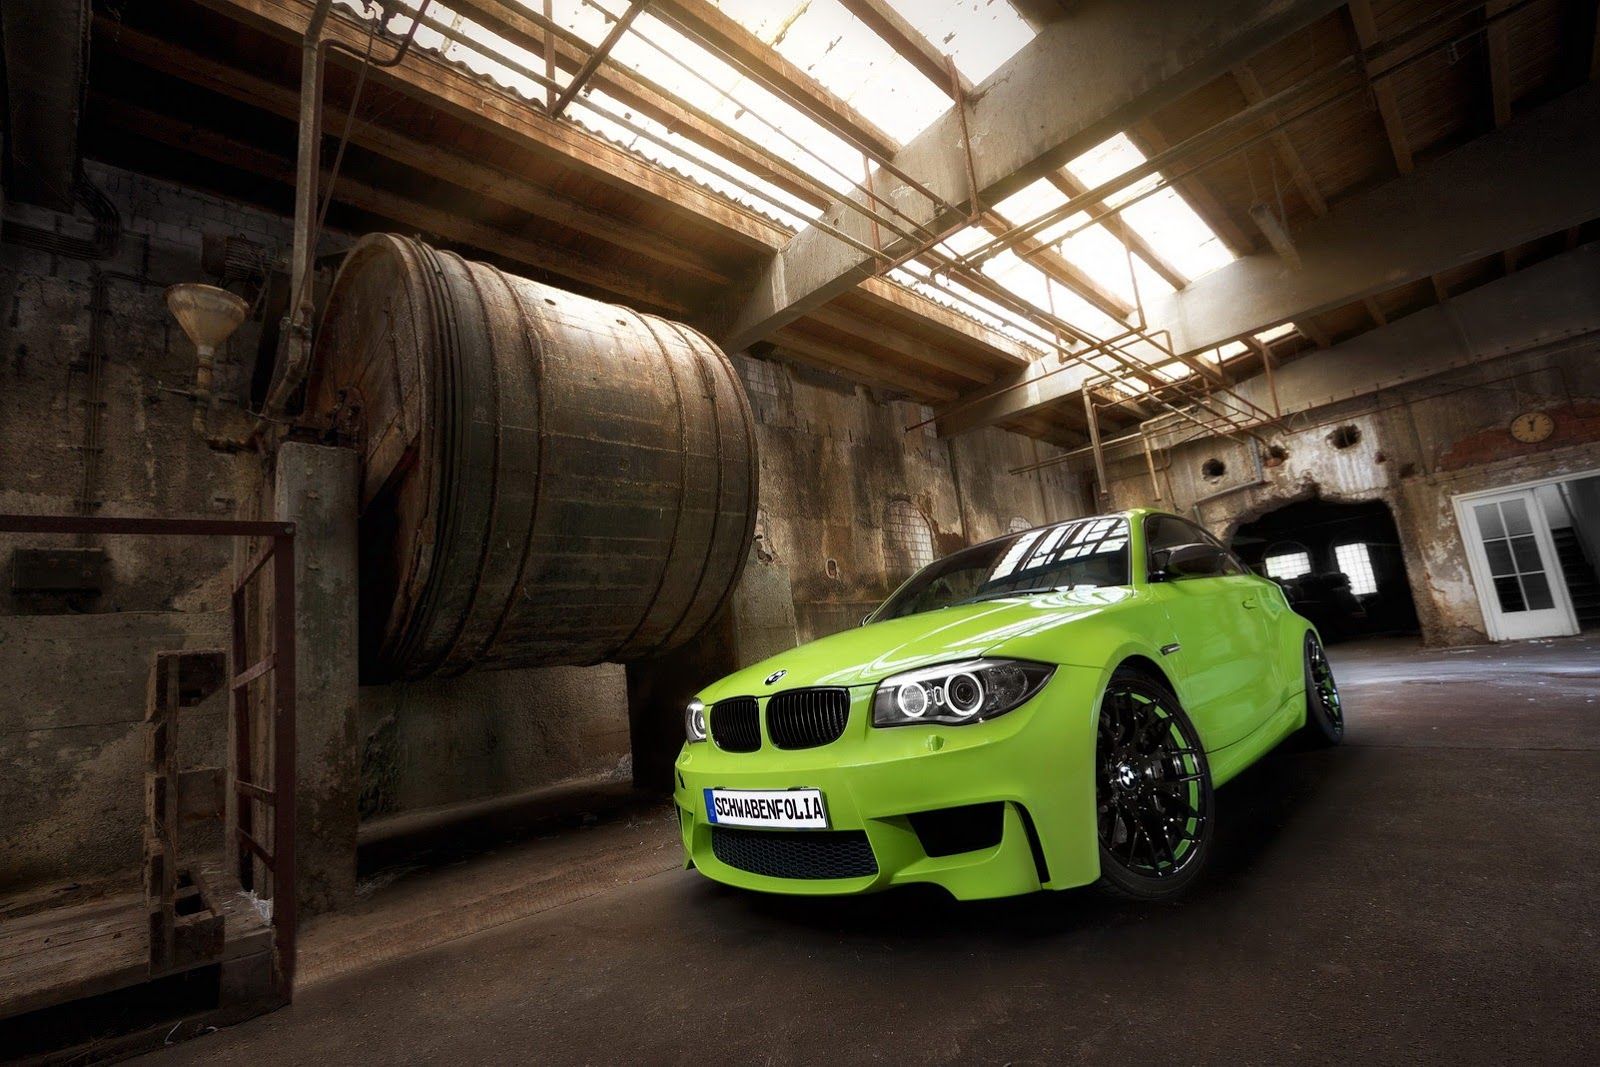 2013 BMW 1-Series M Coupe by Schwabenfolia